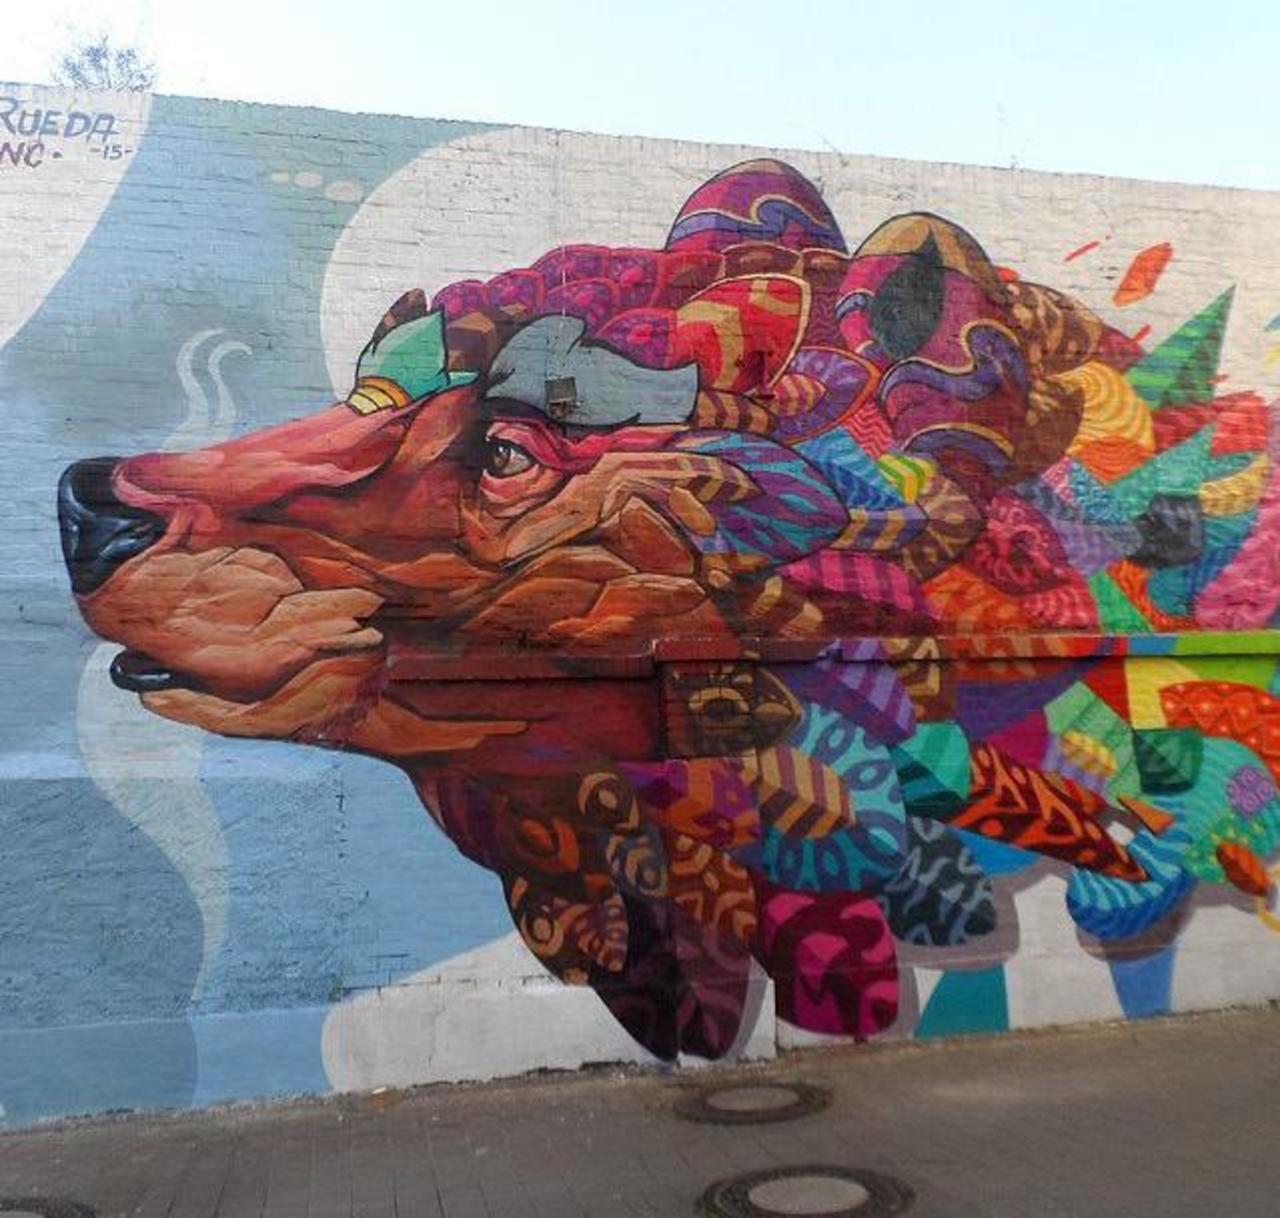 Farid Rueda Street Art 

#art #graffiti #mural #streetart http://t.co/vMWrc4cXz5